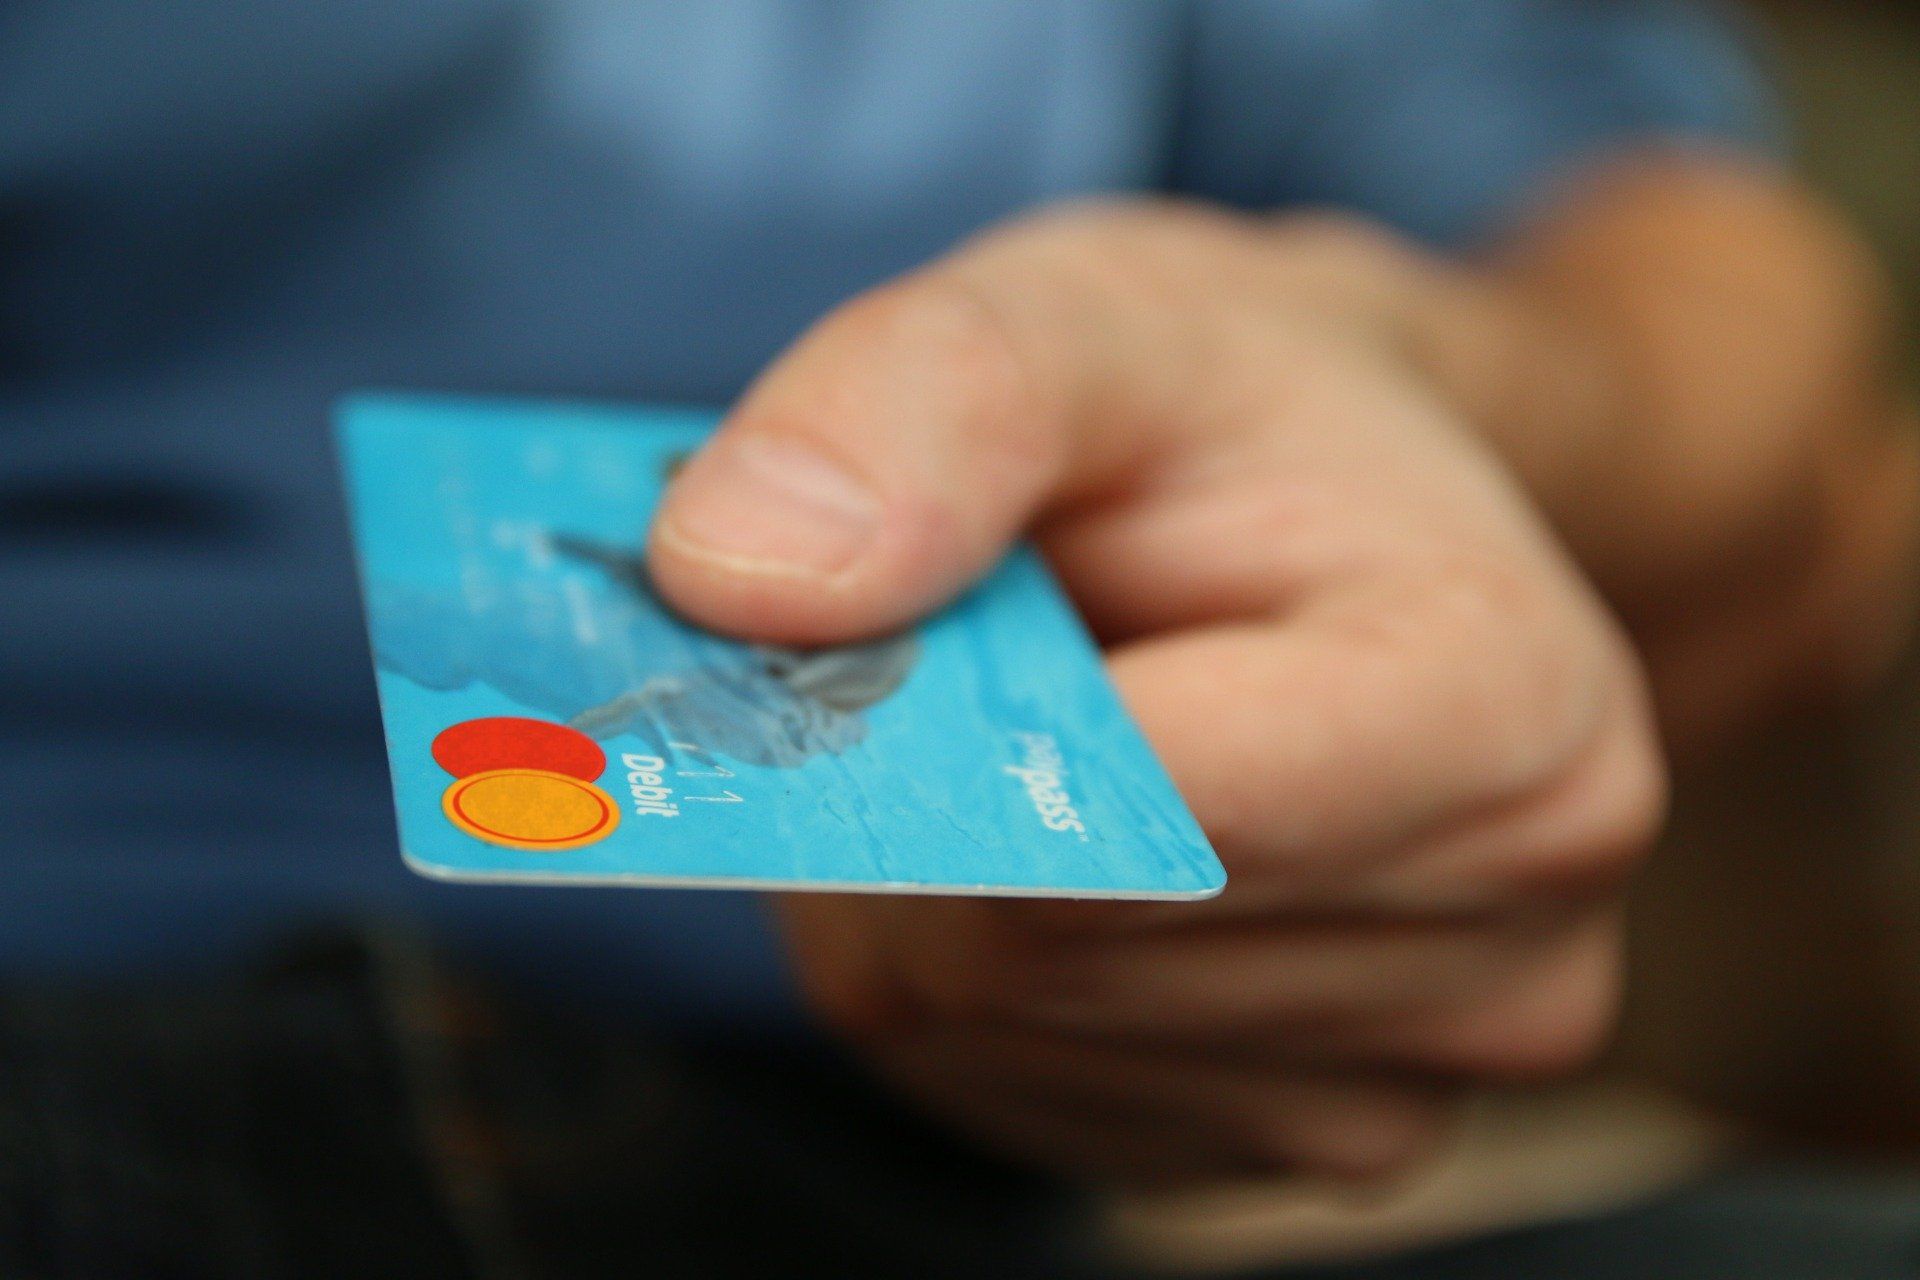 Image of a debit card